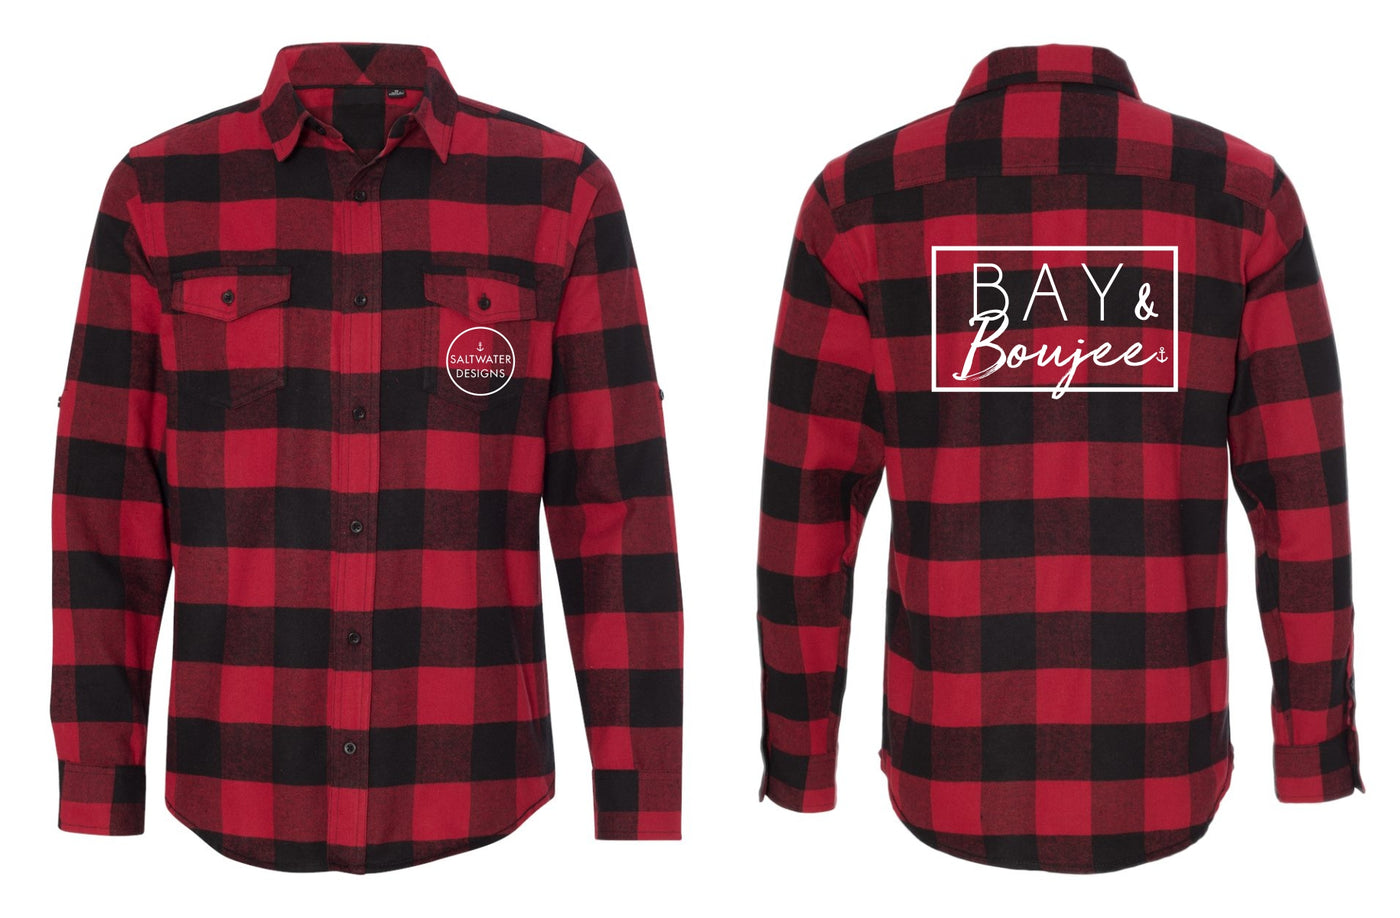 "Bay & Boujee" Unisex Plaid Flannel Shirt